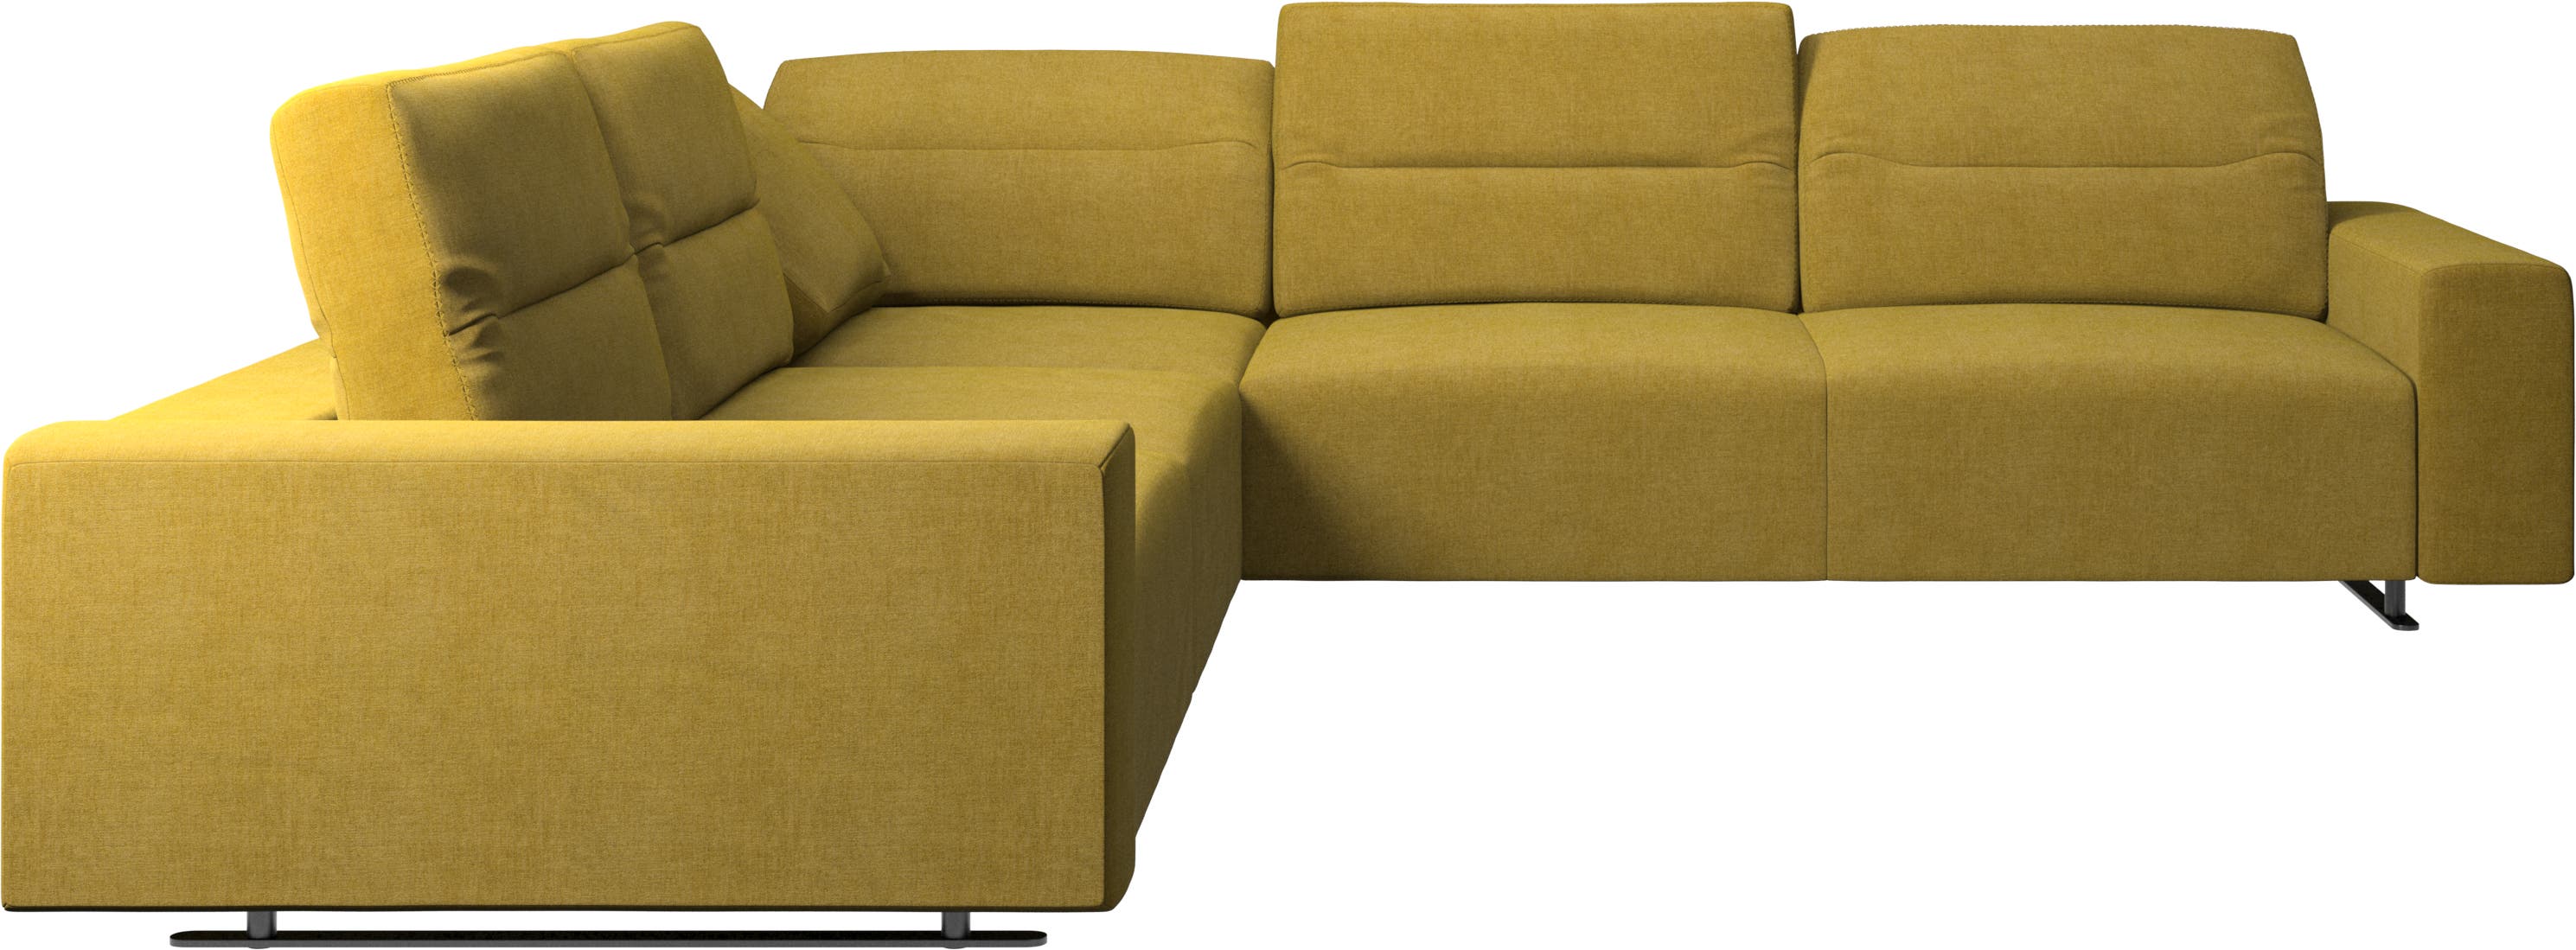 Hampton corner sofa with adjustable back